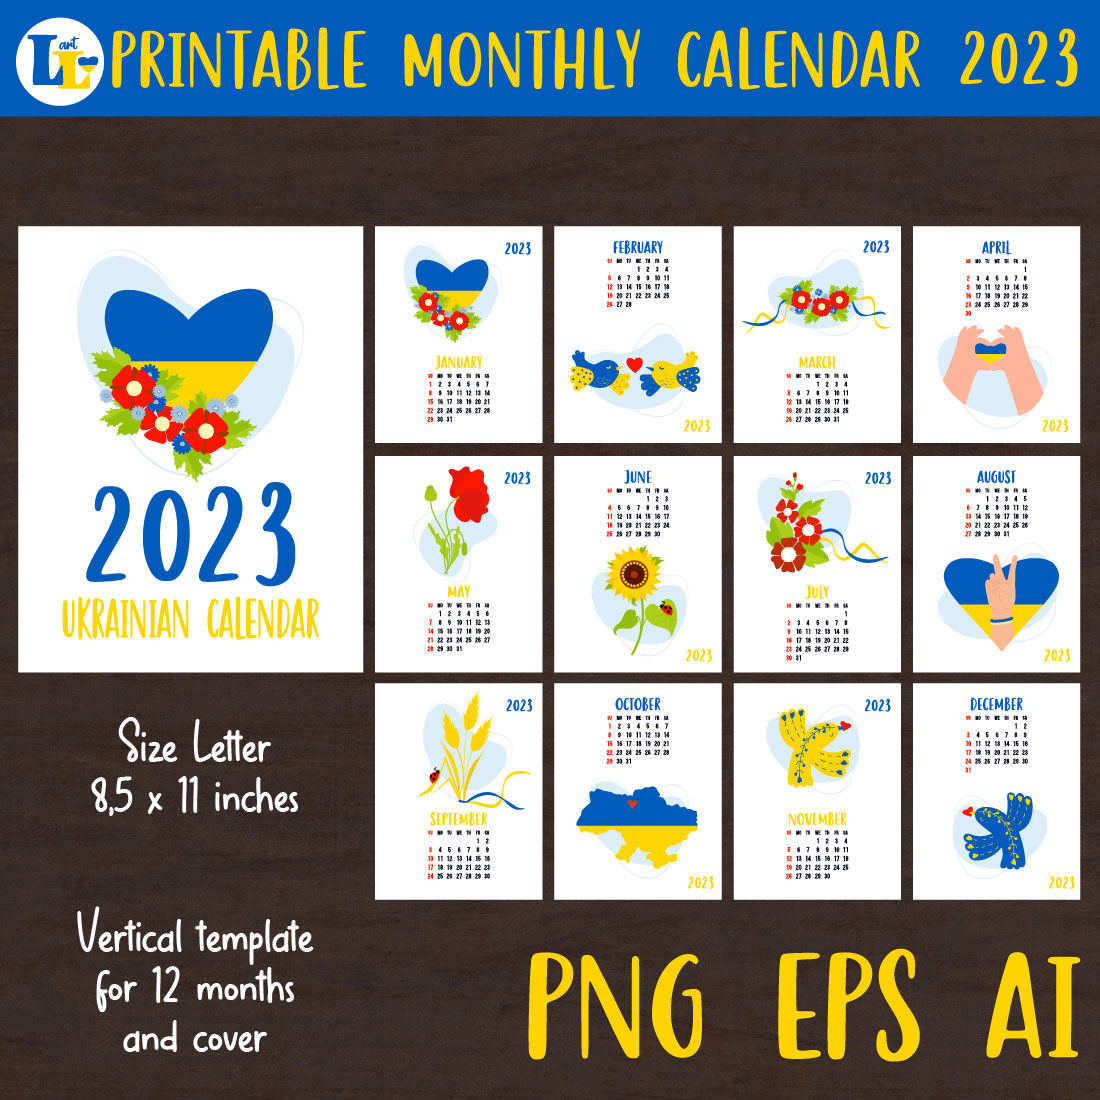 Ukrainian Calendar 2023 Printable Monthly Template cover image.